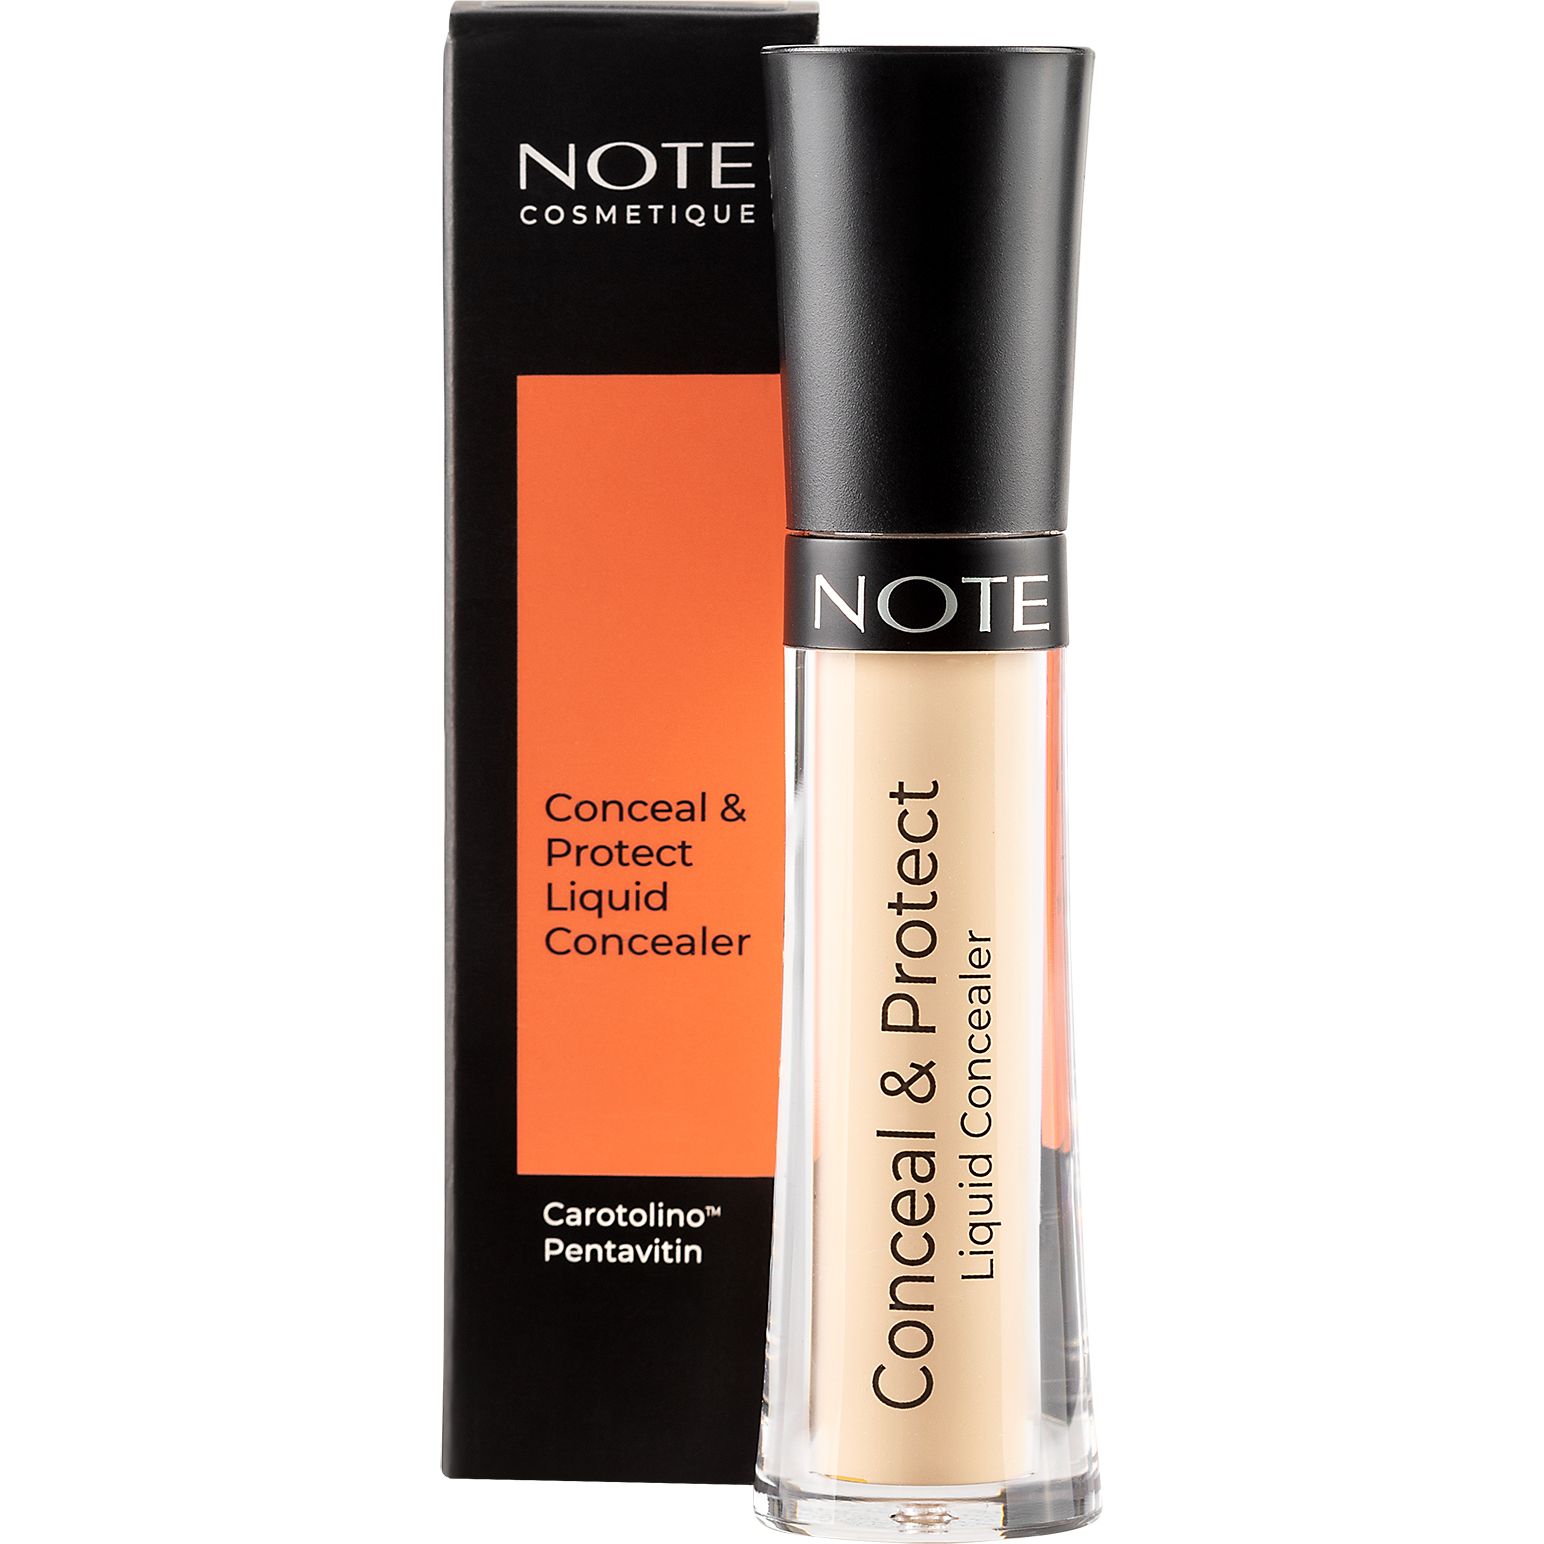 Рідкий консилер Note Cosmetique Conceal & Protect Liquid Concealer відтінок 02 (Sand) 4.5 мл - фото 1